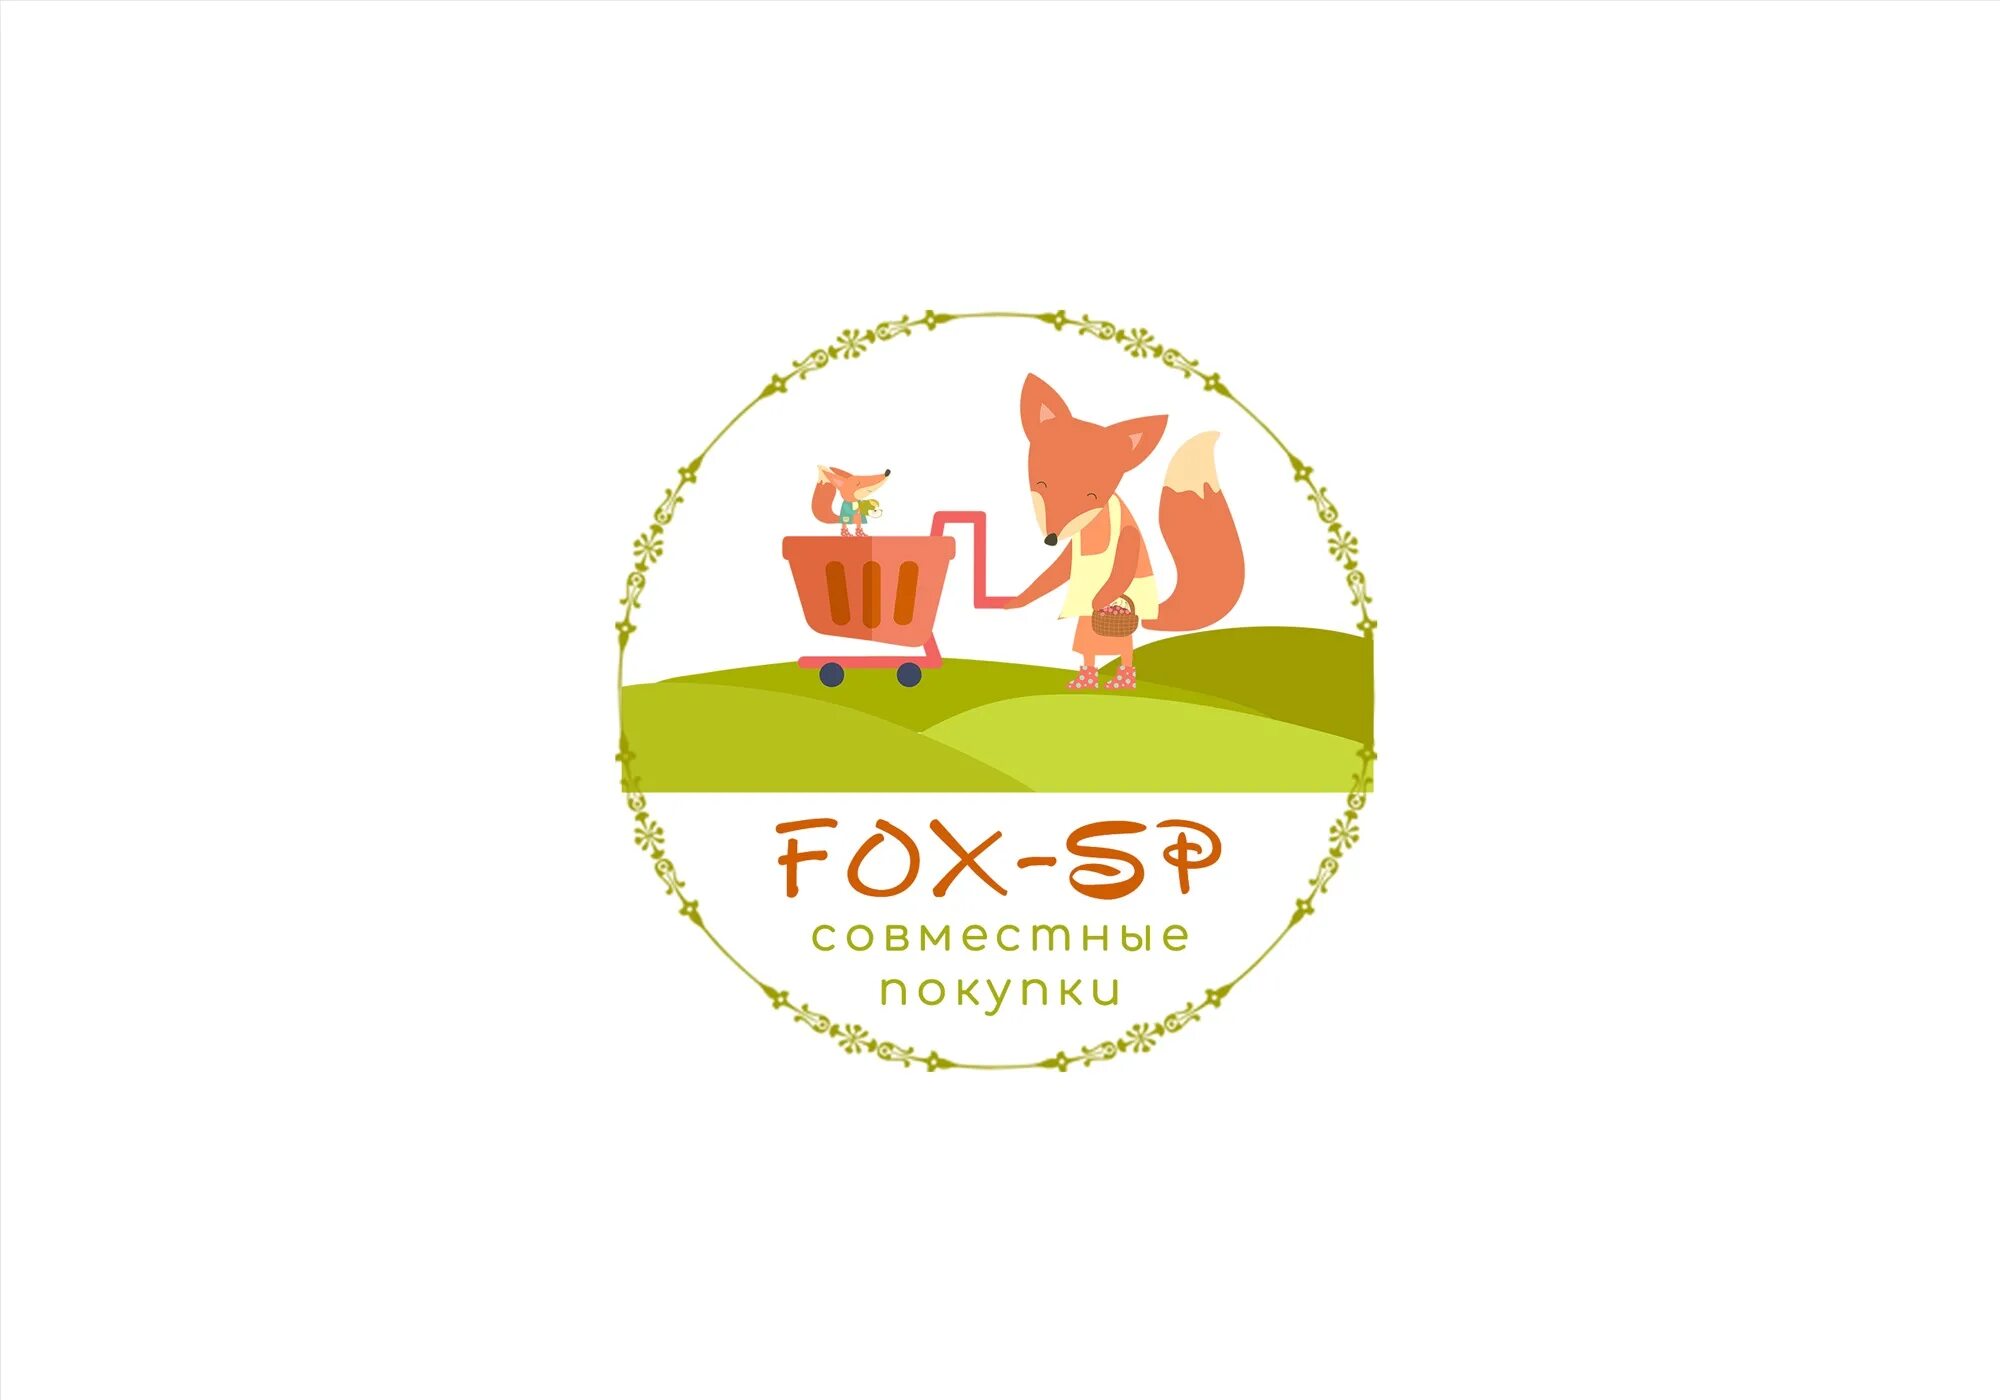 Фокс СП Ангарск. Fox логотип магазина. Карта магазина Фокс. Фокс магазин обуви логотип.